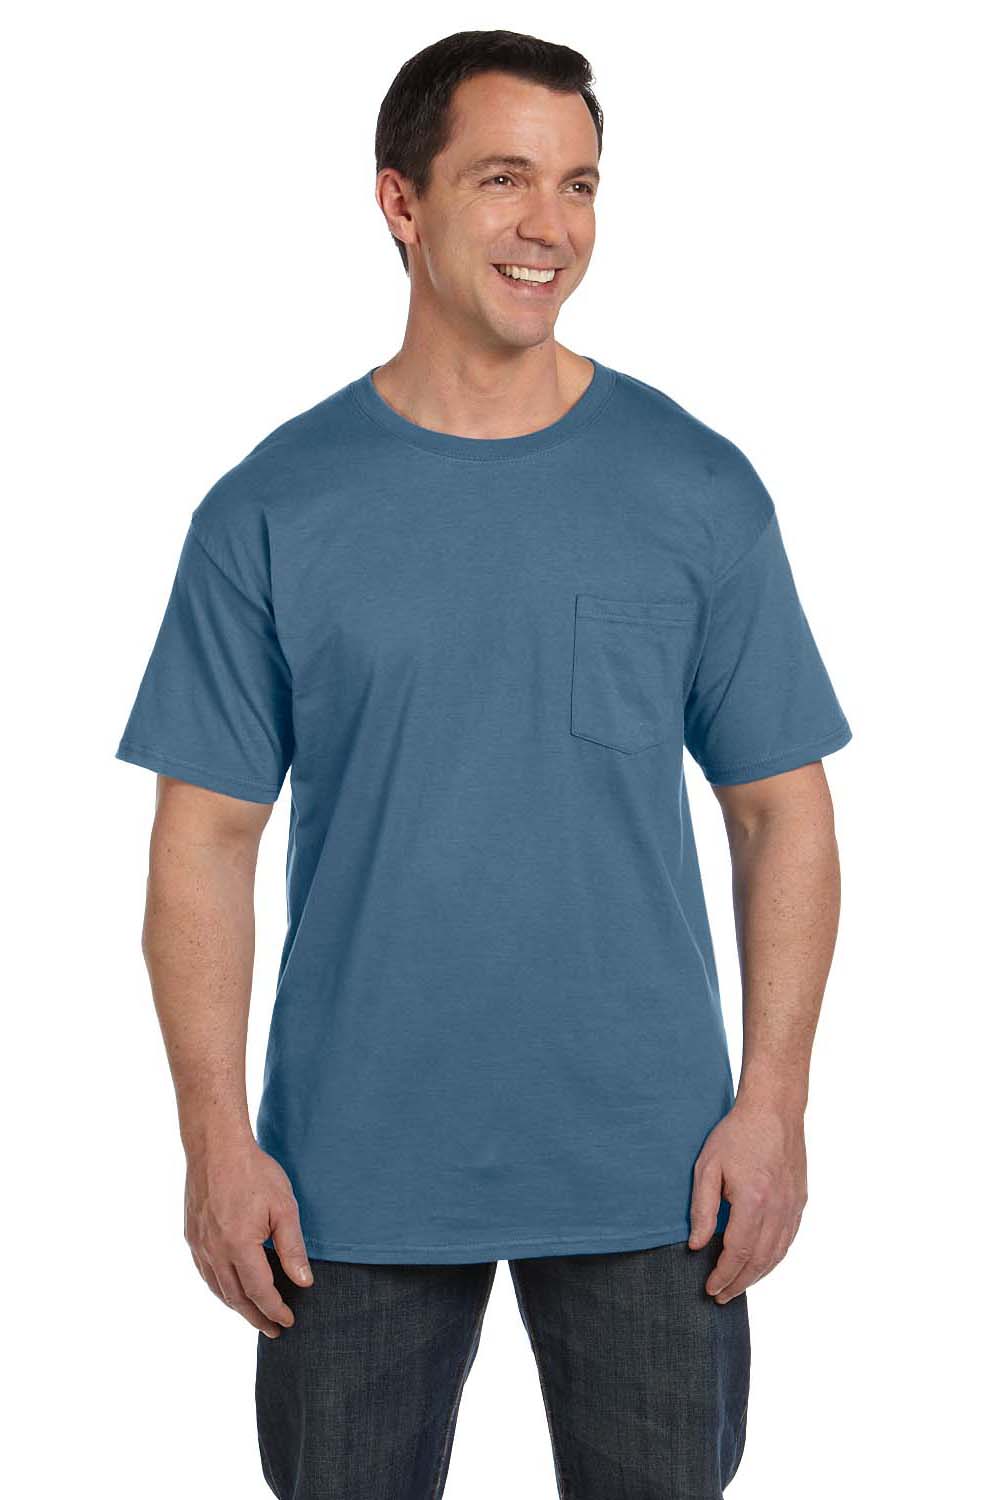 Hanes 5190P Mens Beefy-T Short Sleeve Crewneck T-Shirt w/ Pocket Denim Blue Front